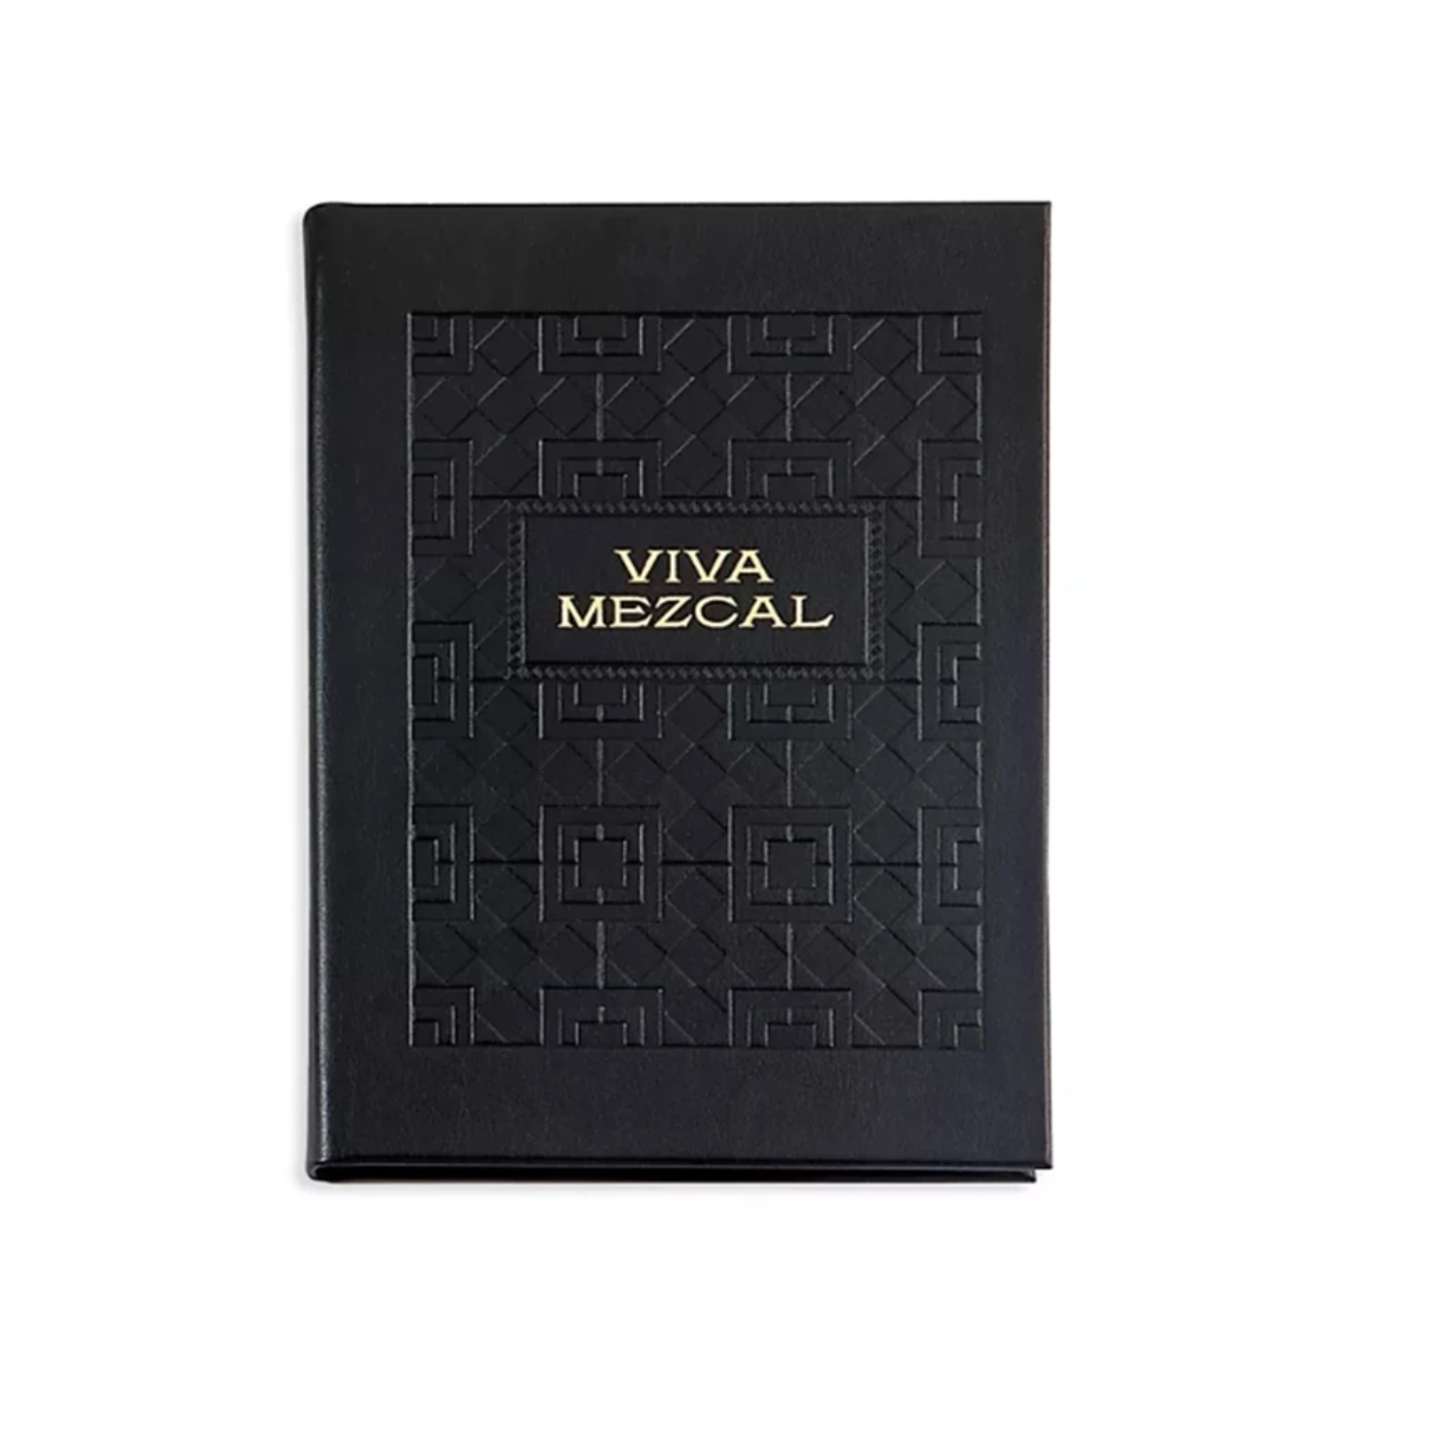 Leather Bound Viva Mezcal Book